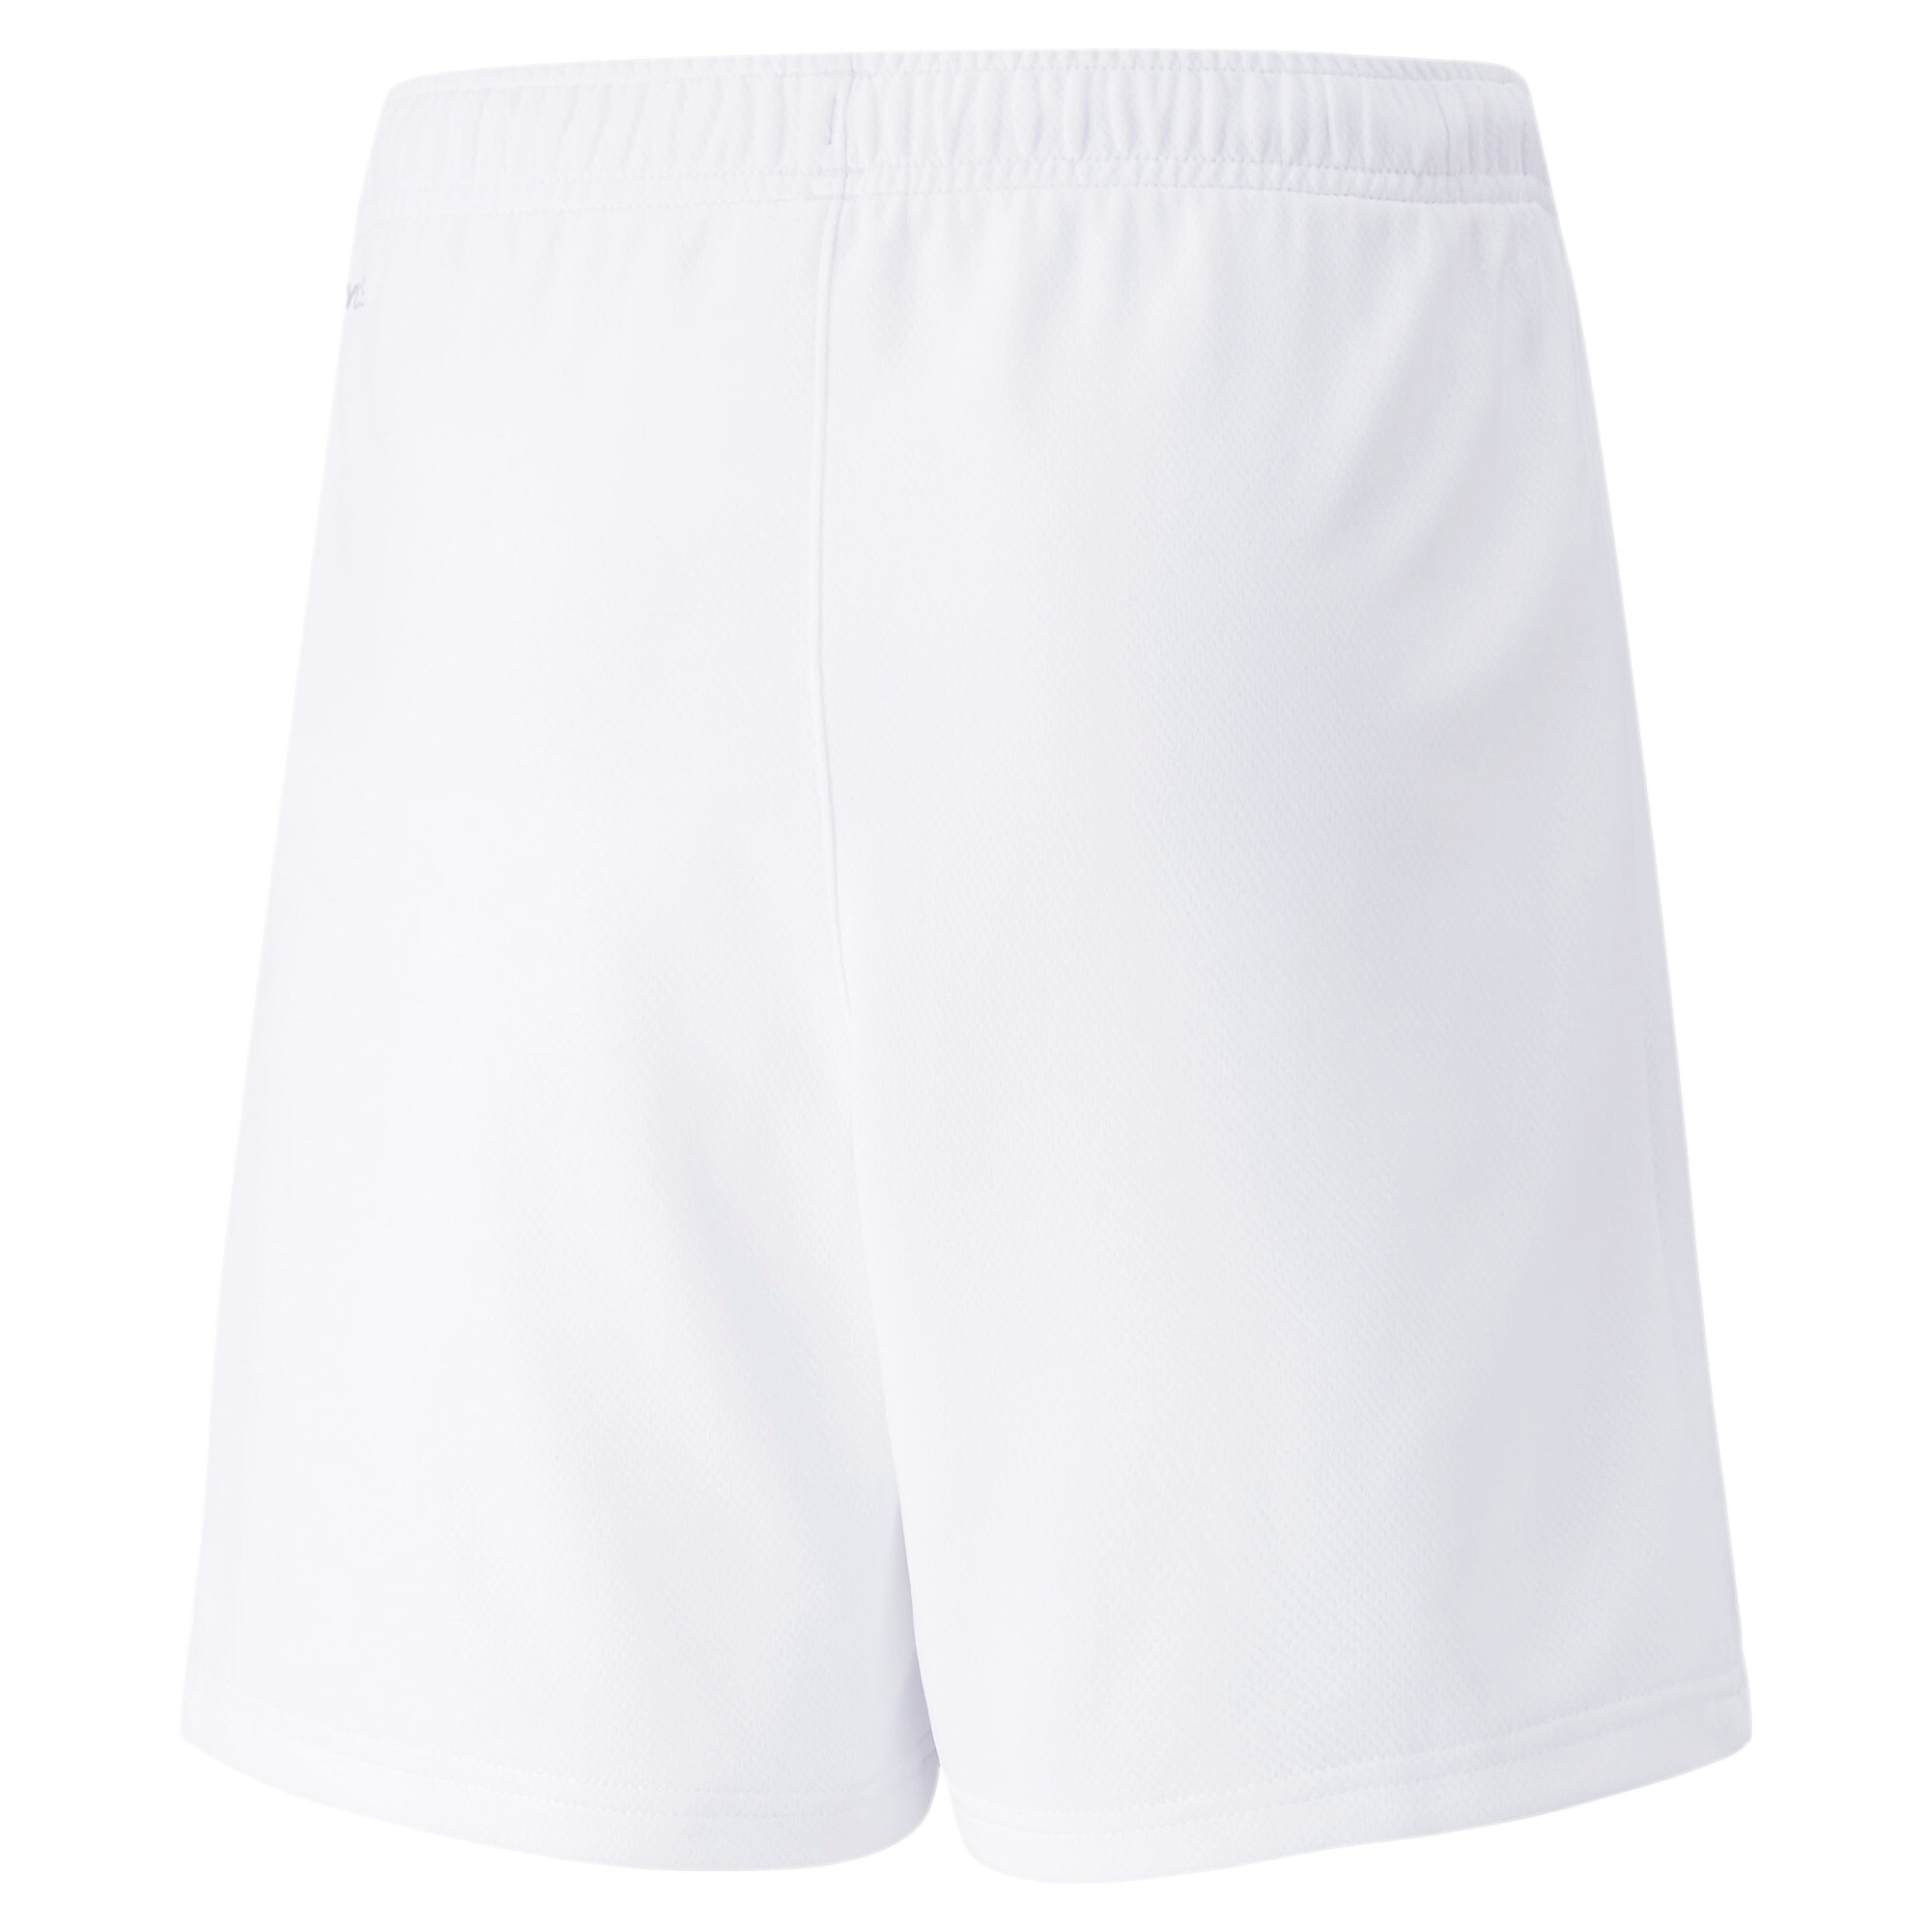 Puma Team RISE Youth Football Shorts, White, Size 11-12Y, Clothing